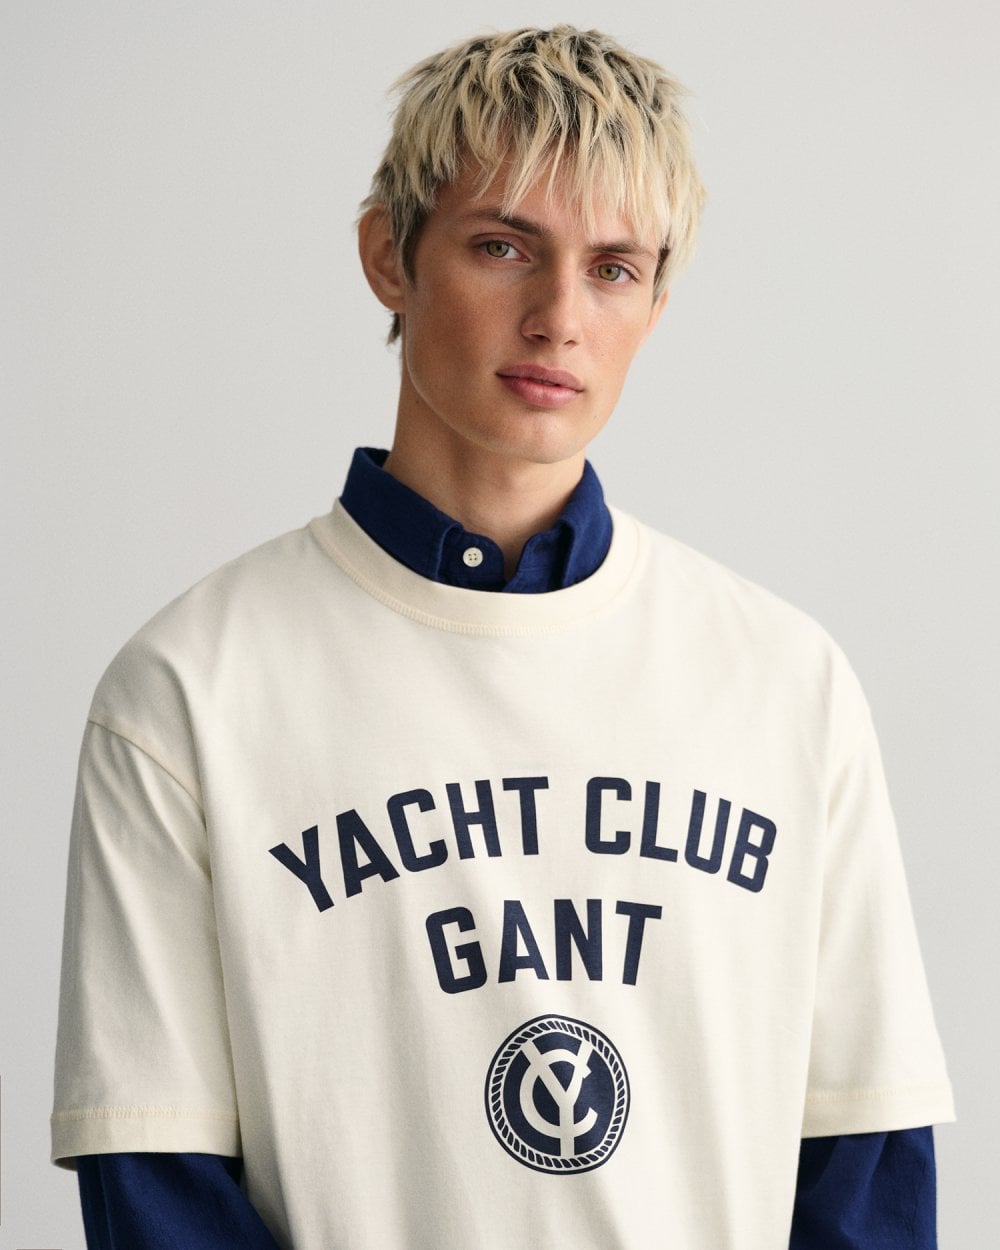 Gant Yacht Club T-Shirt